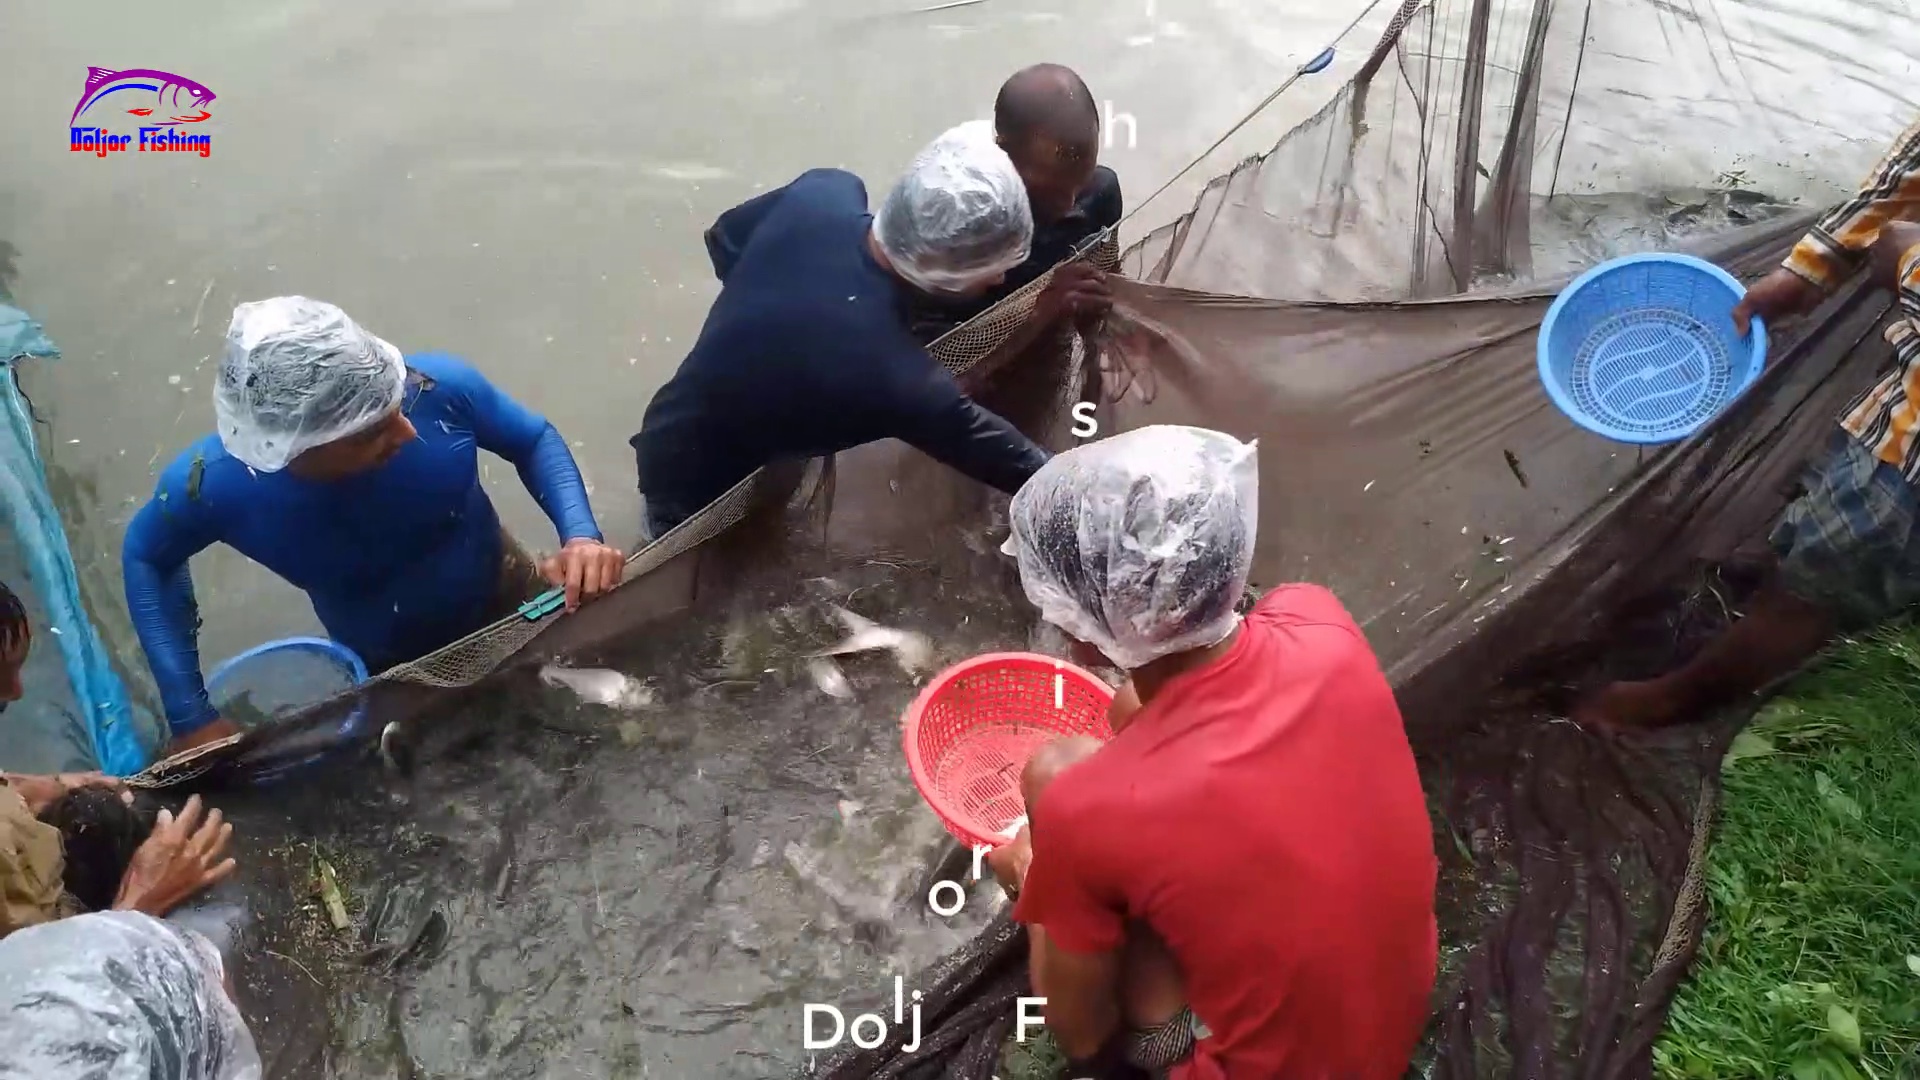 Amazing Fishing Videos-2020 ||  Chaka Fish Video In the Village Pond || By Doljor Fishing